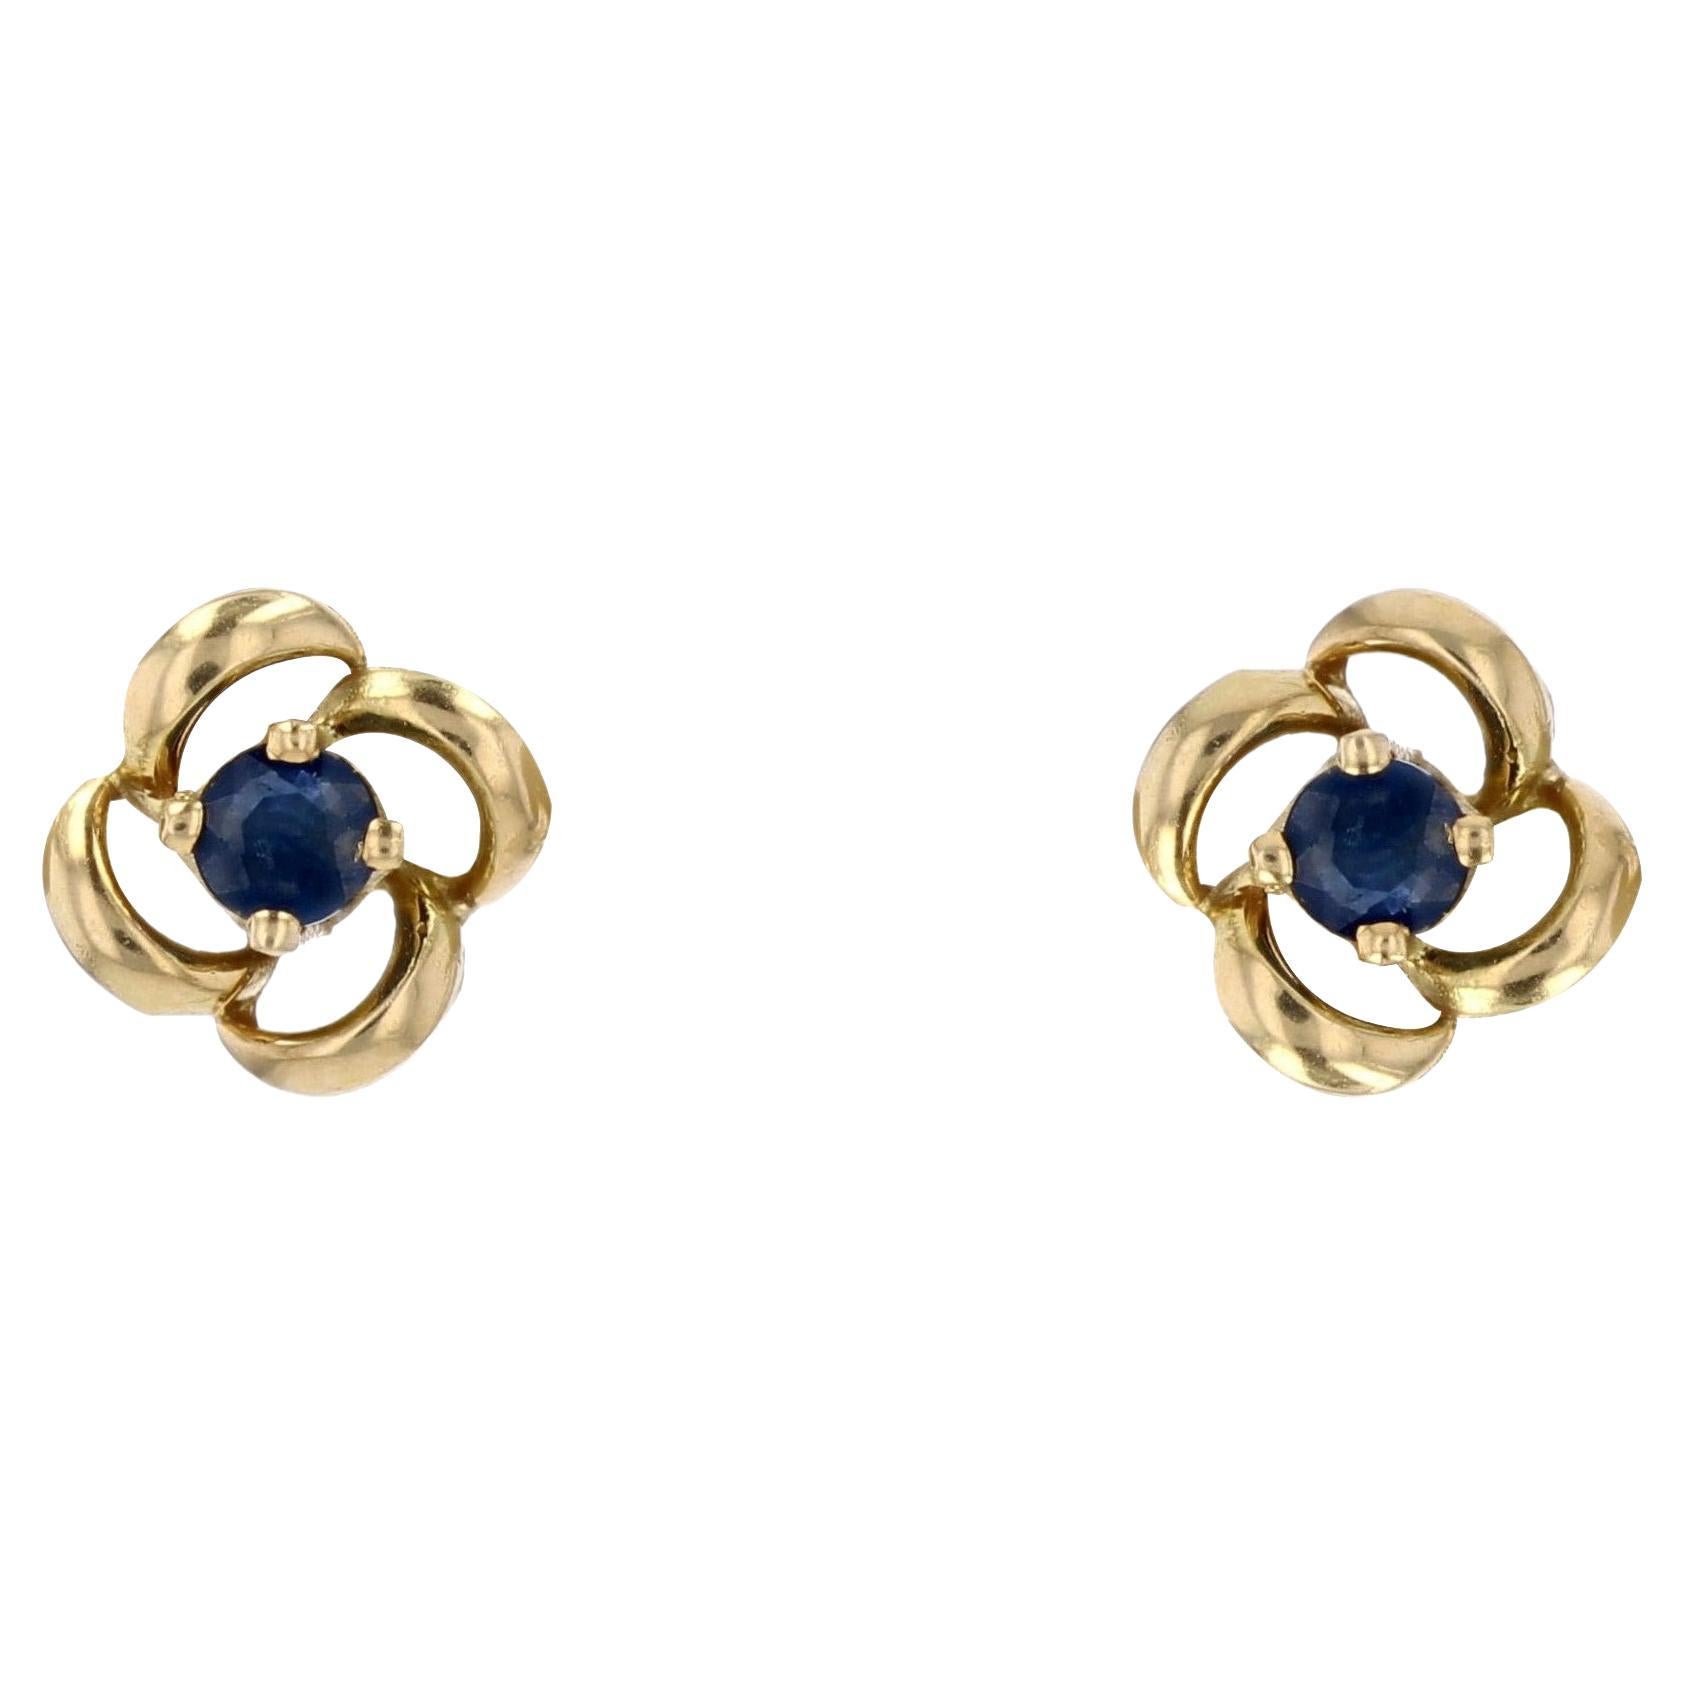 Modern Sapphire 18 Karat Yellow Gold Flower Stud Earrings